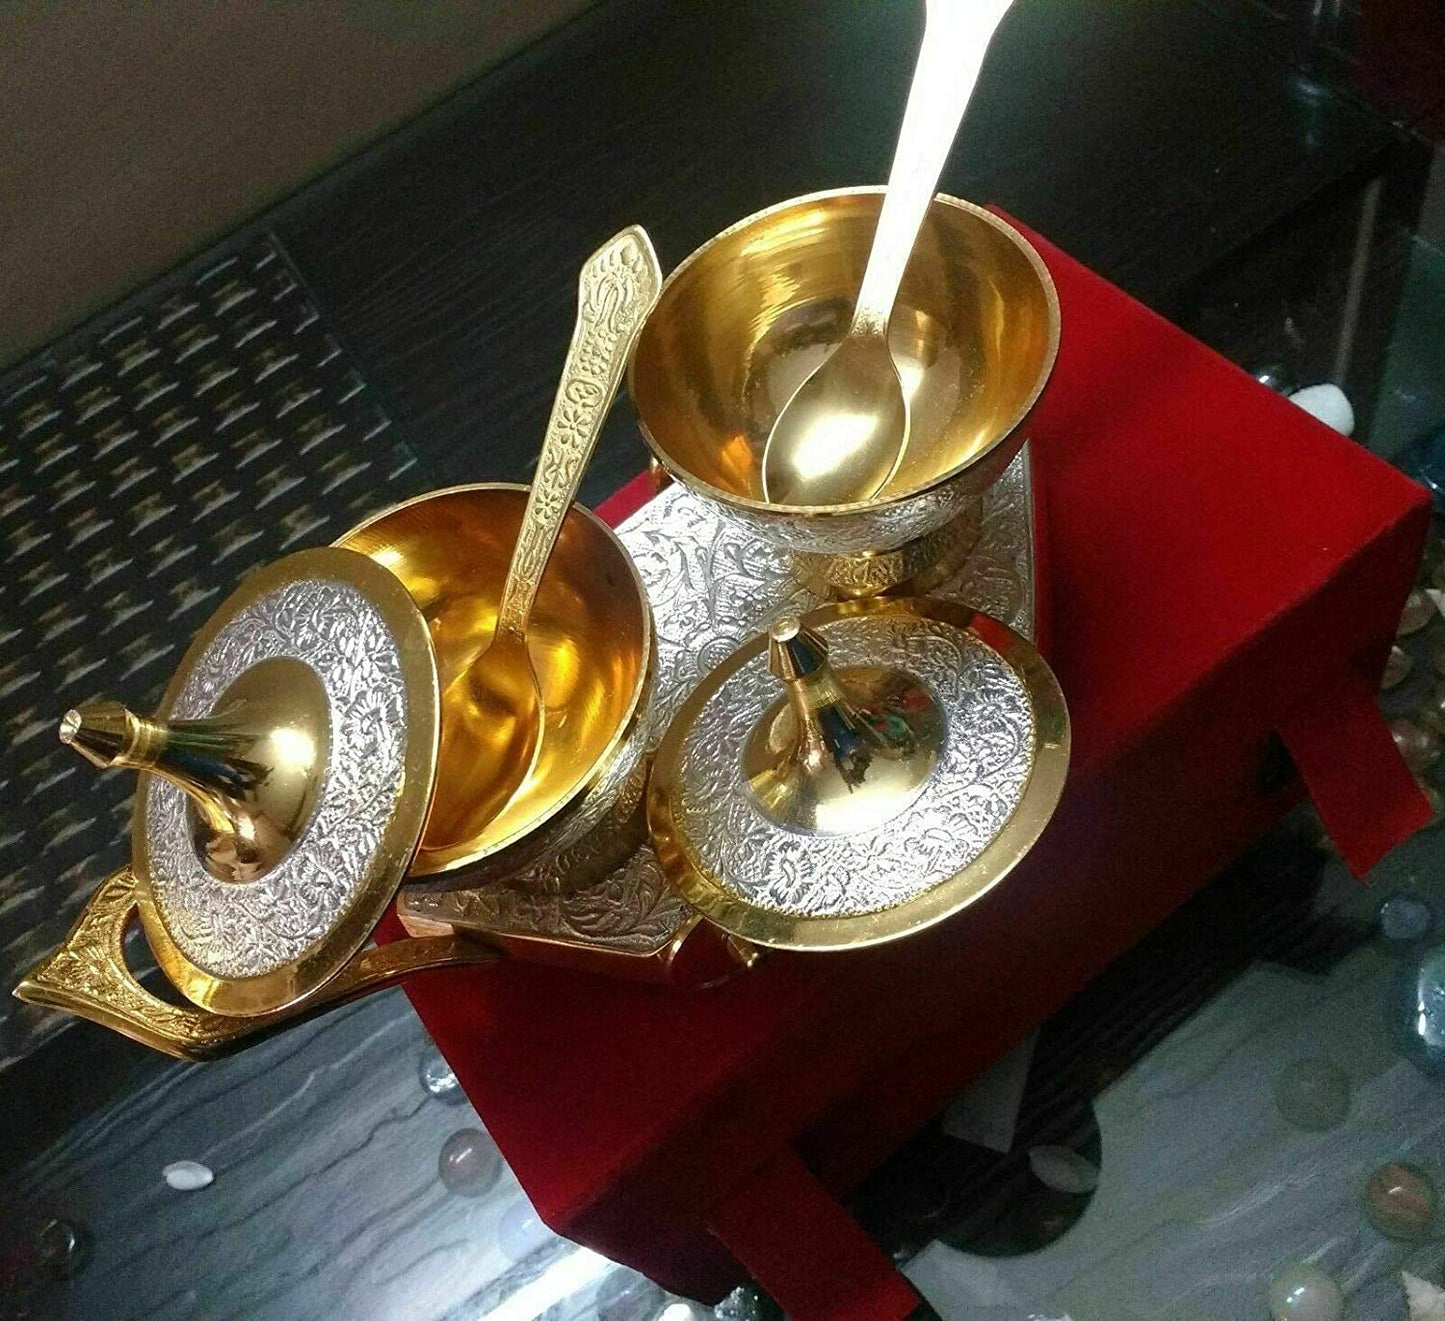 Rudra Exports Silver & Gold Plated Brass Bowl Set on Trolley Velvet Box Best Deepawali Gift